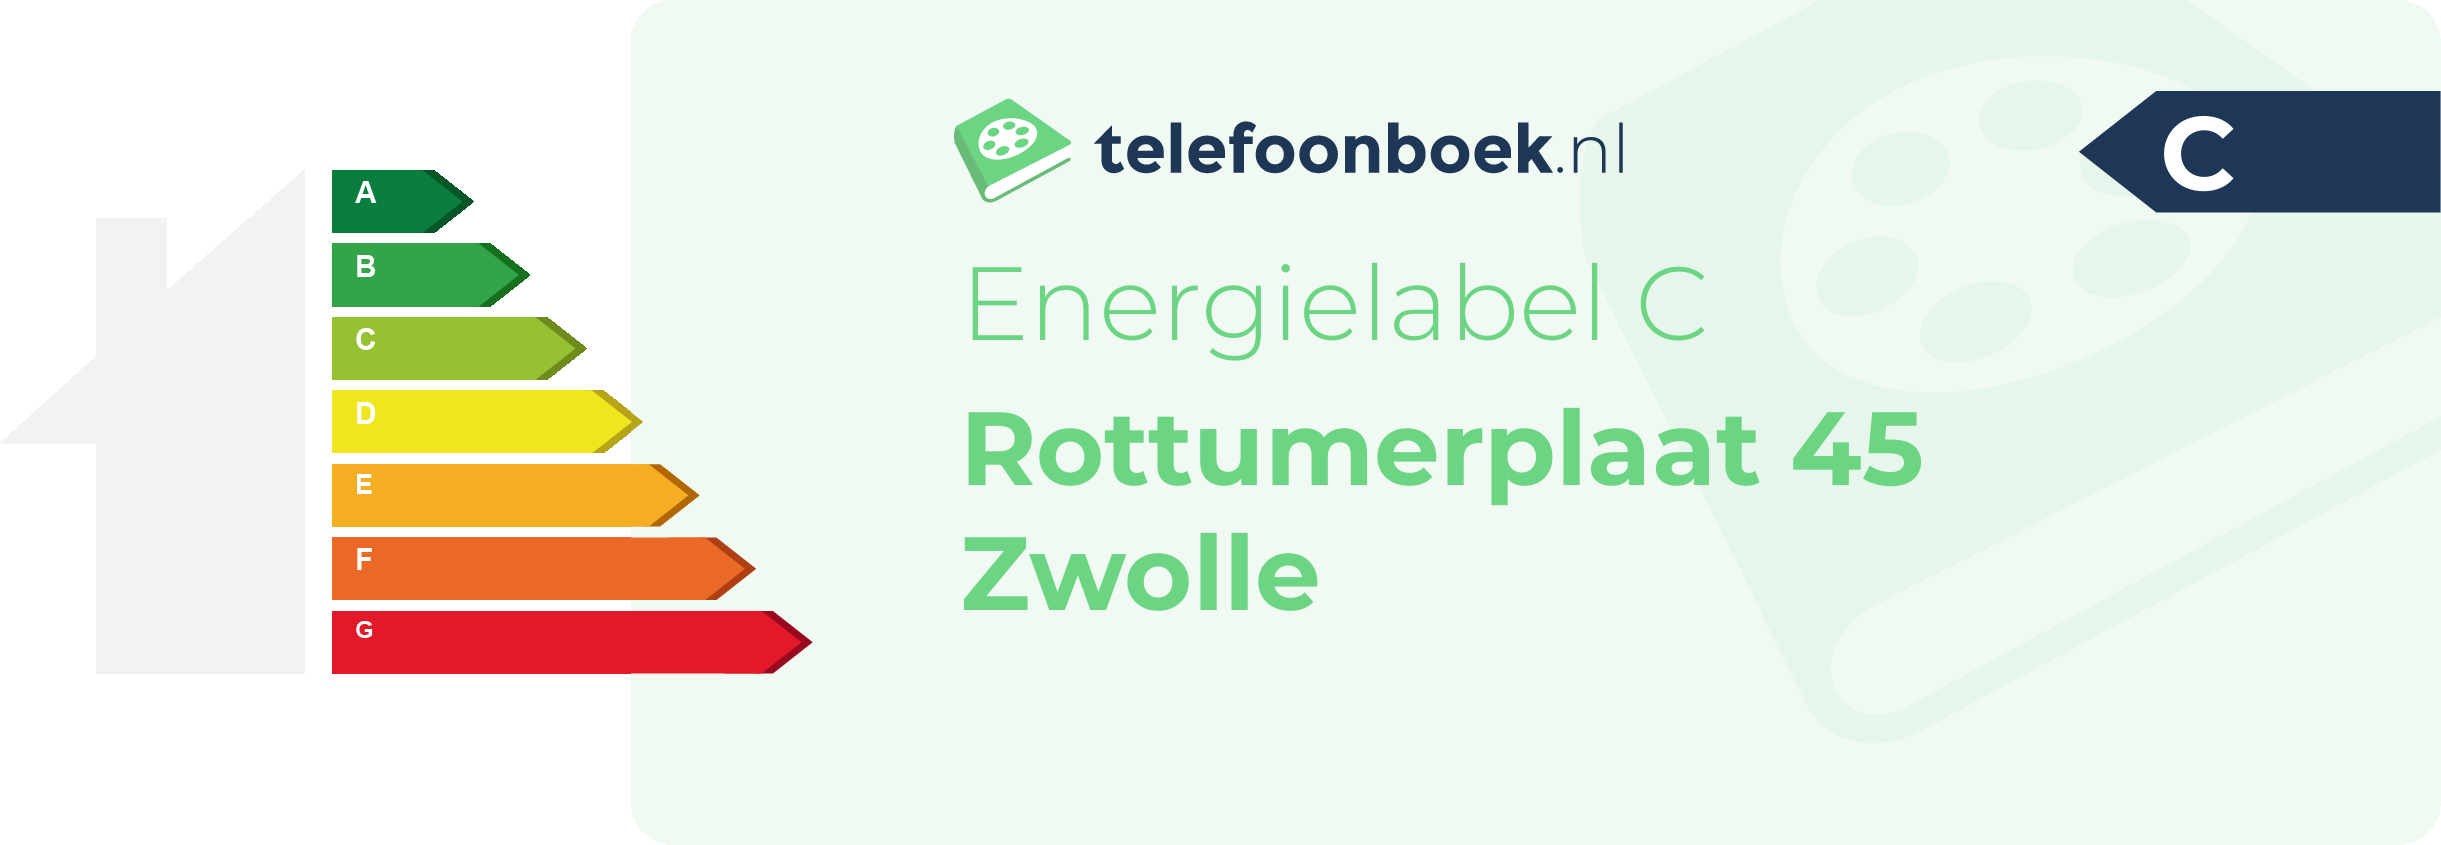 Energielabel Rottumerplaat 45 Zwolle